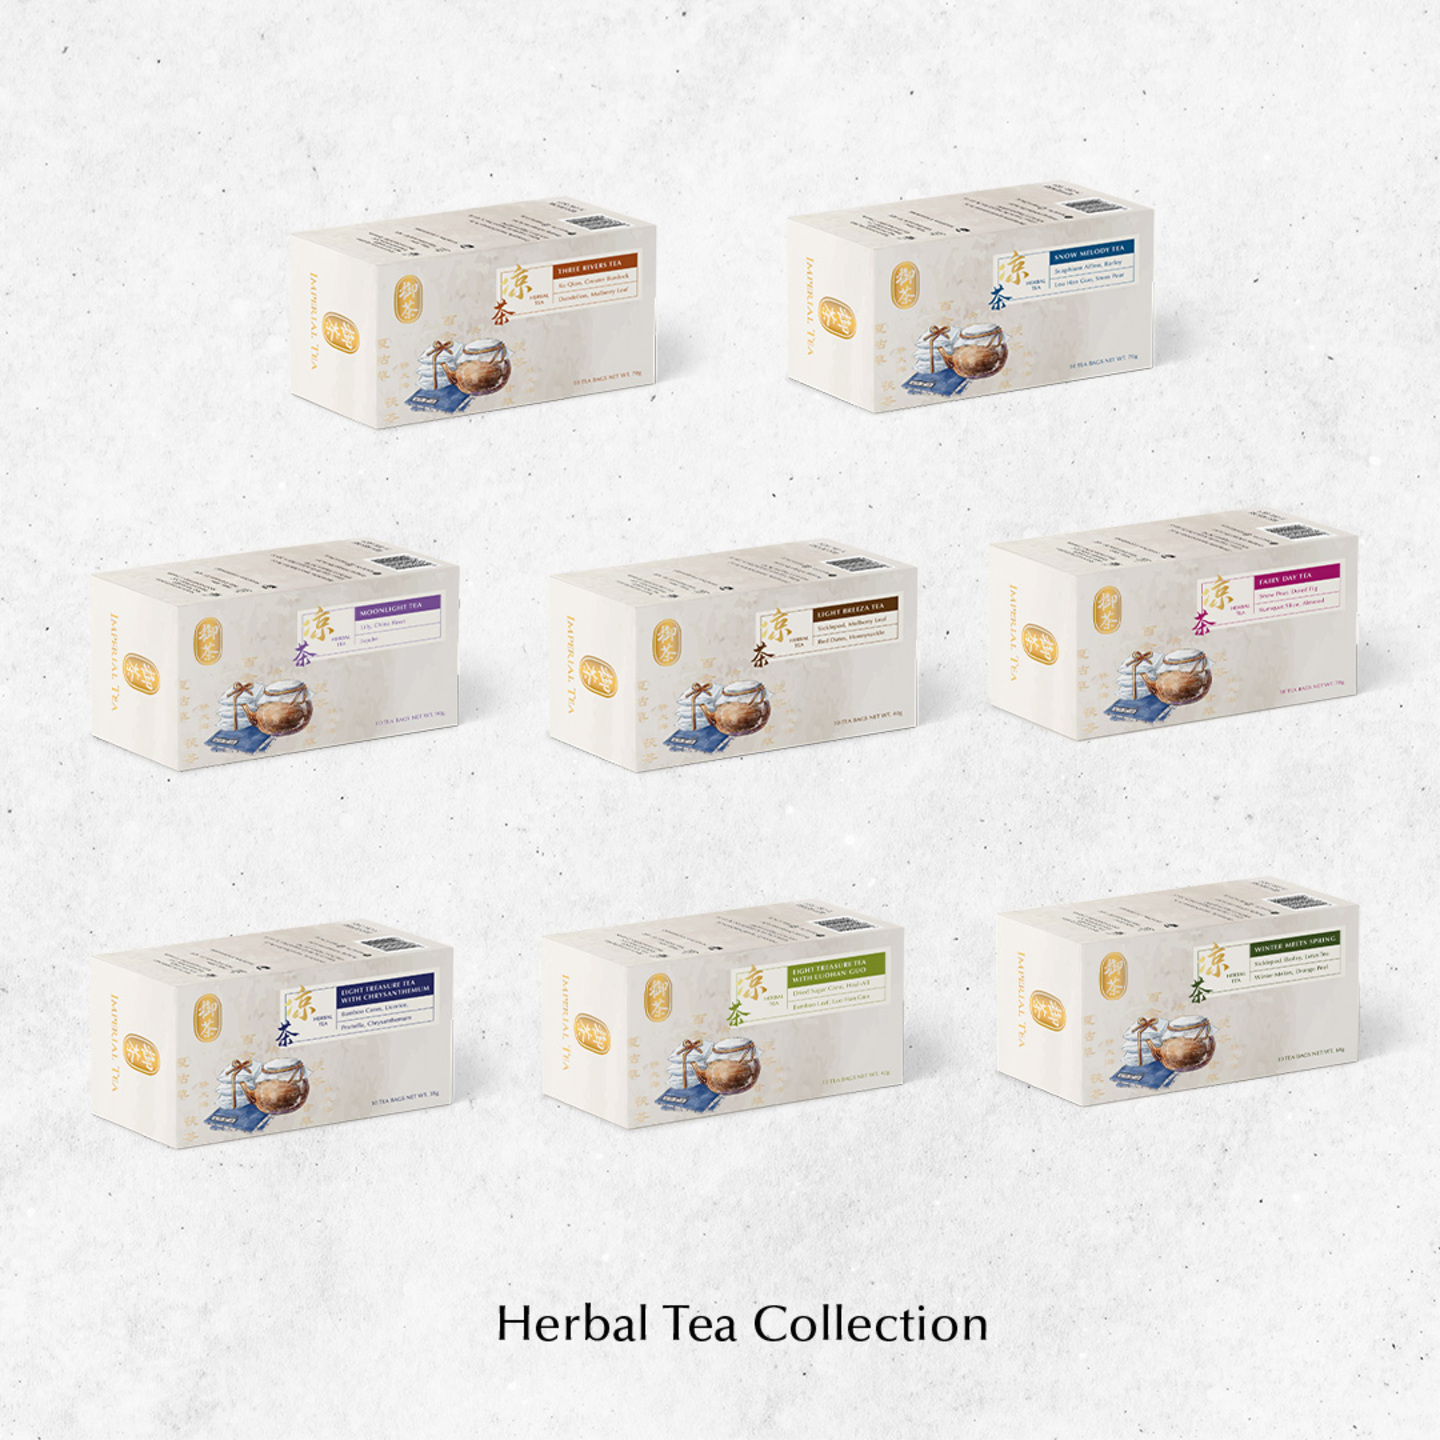 Imperial Tea 御茶 Herbal Tea Collection 凉茶系列